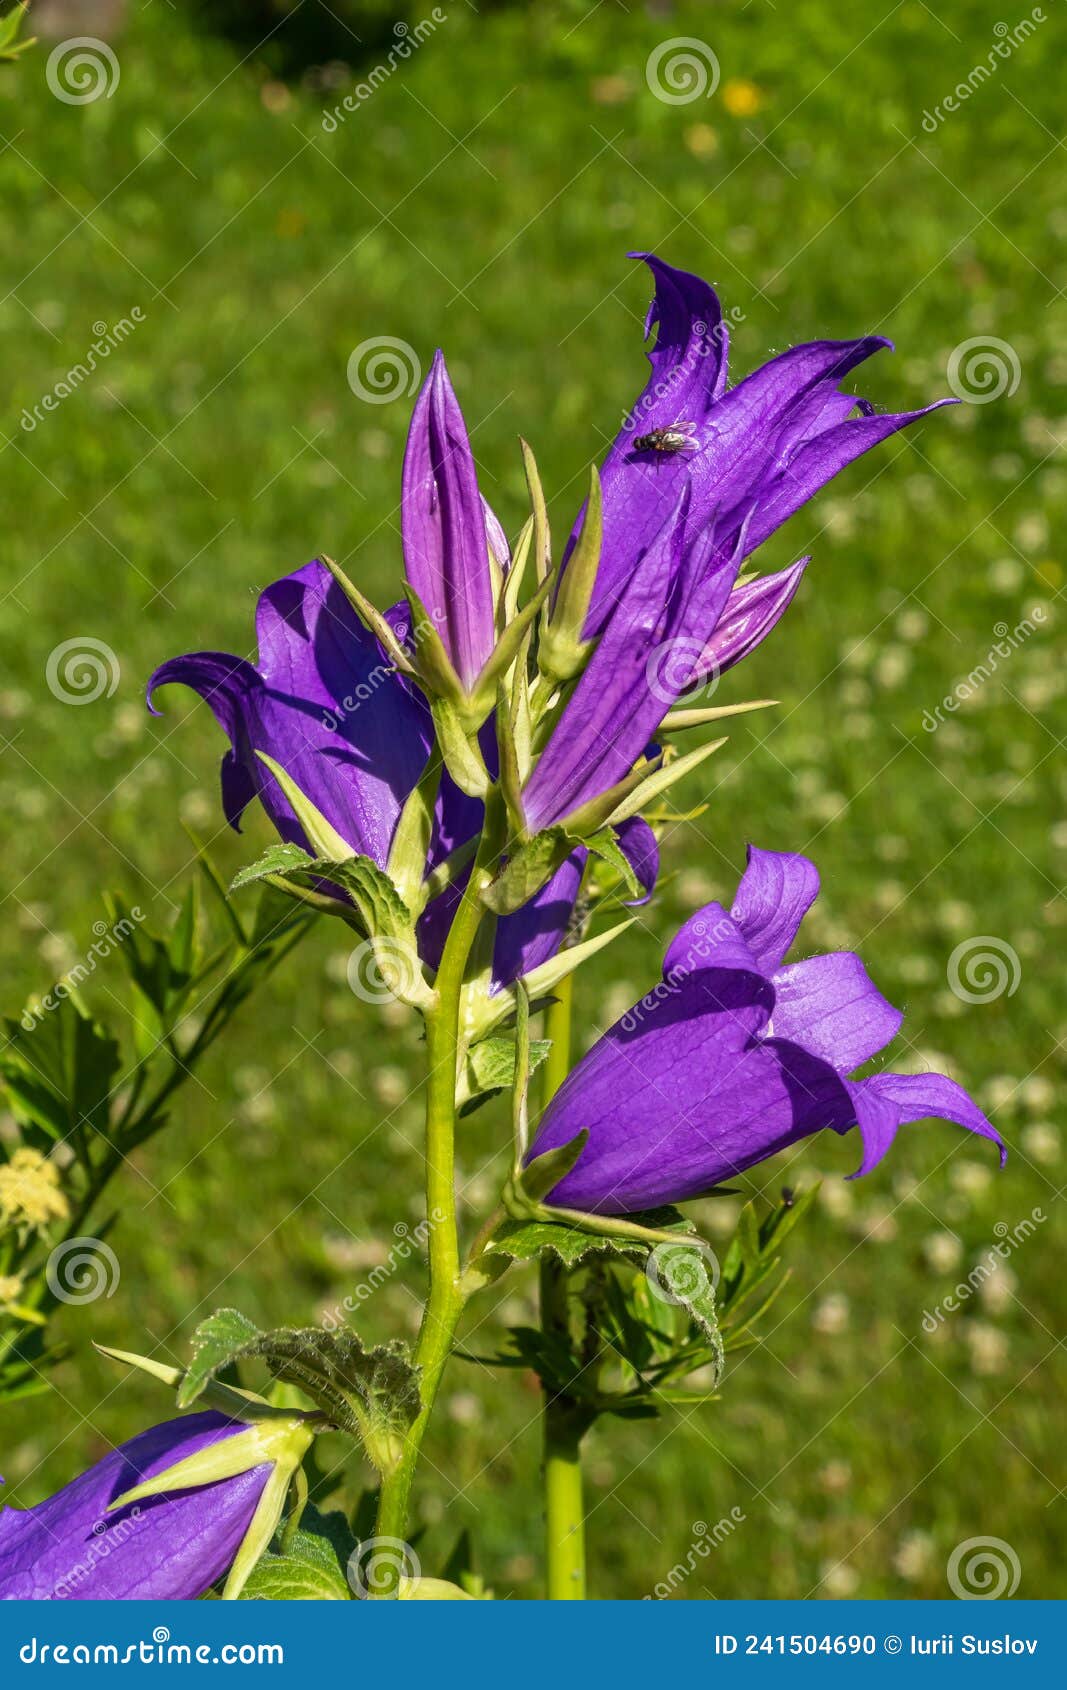 Russia. Leningrad region. July 4, 2020. A bright purple bell flower in the Kirishi City Park. Russia. Leningrad region. July 4, 2020. Bright large purple bluebell flowers have bloomed in the Kirishi City Park.